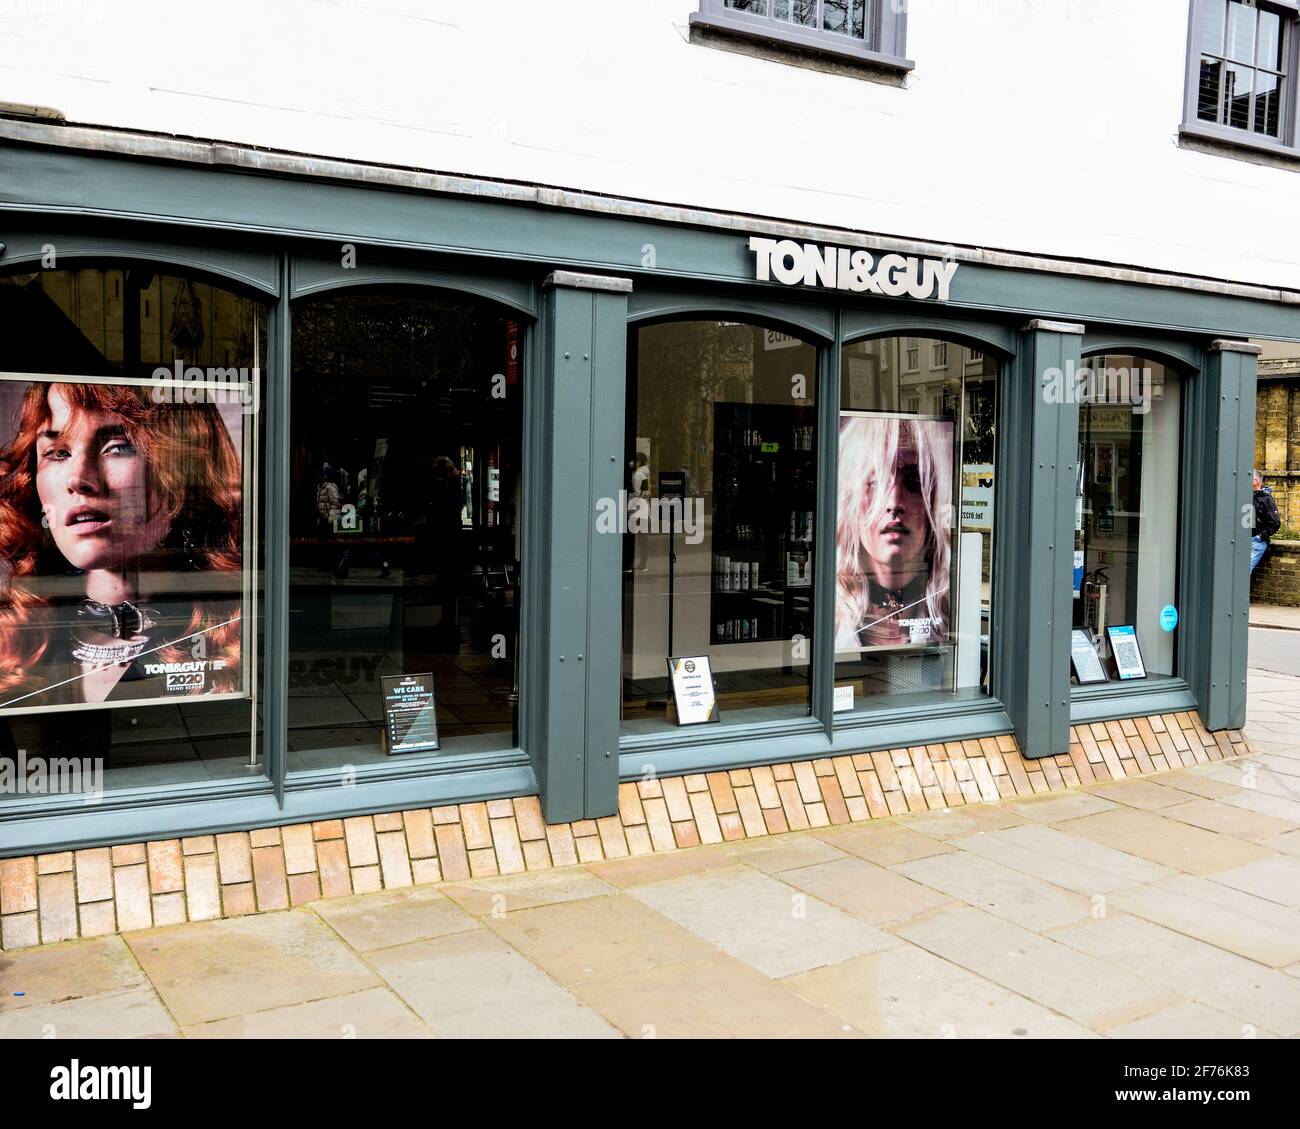 Cambridge, UK, England, 03-04-2021. Building exterior of Toni and Guy Hair Stylists. Stock Photo